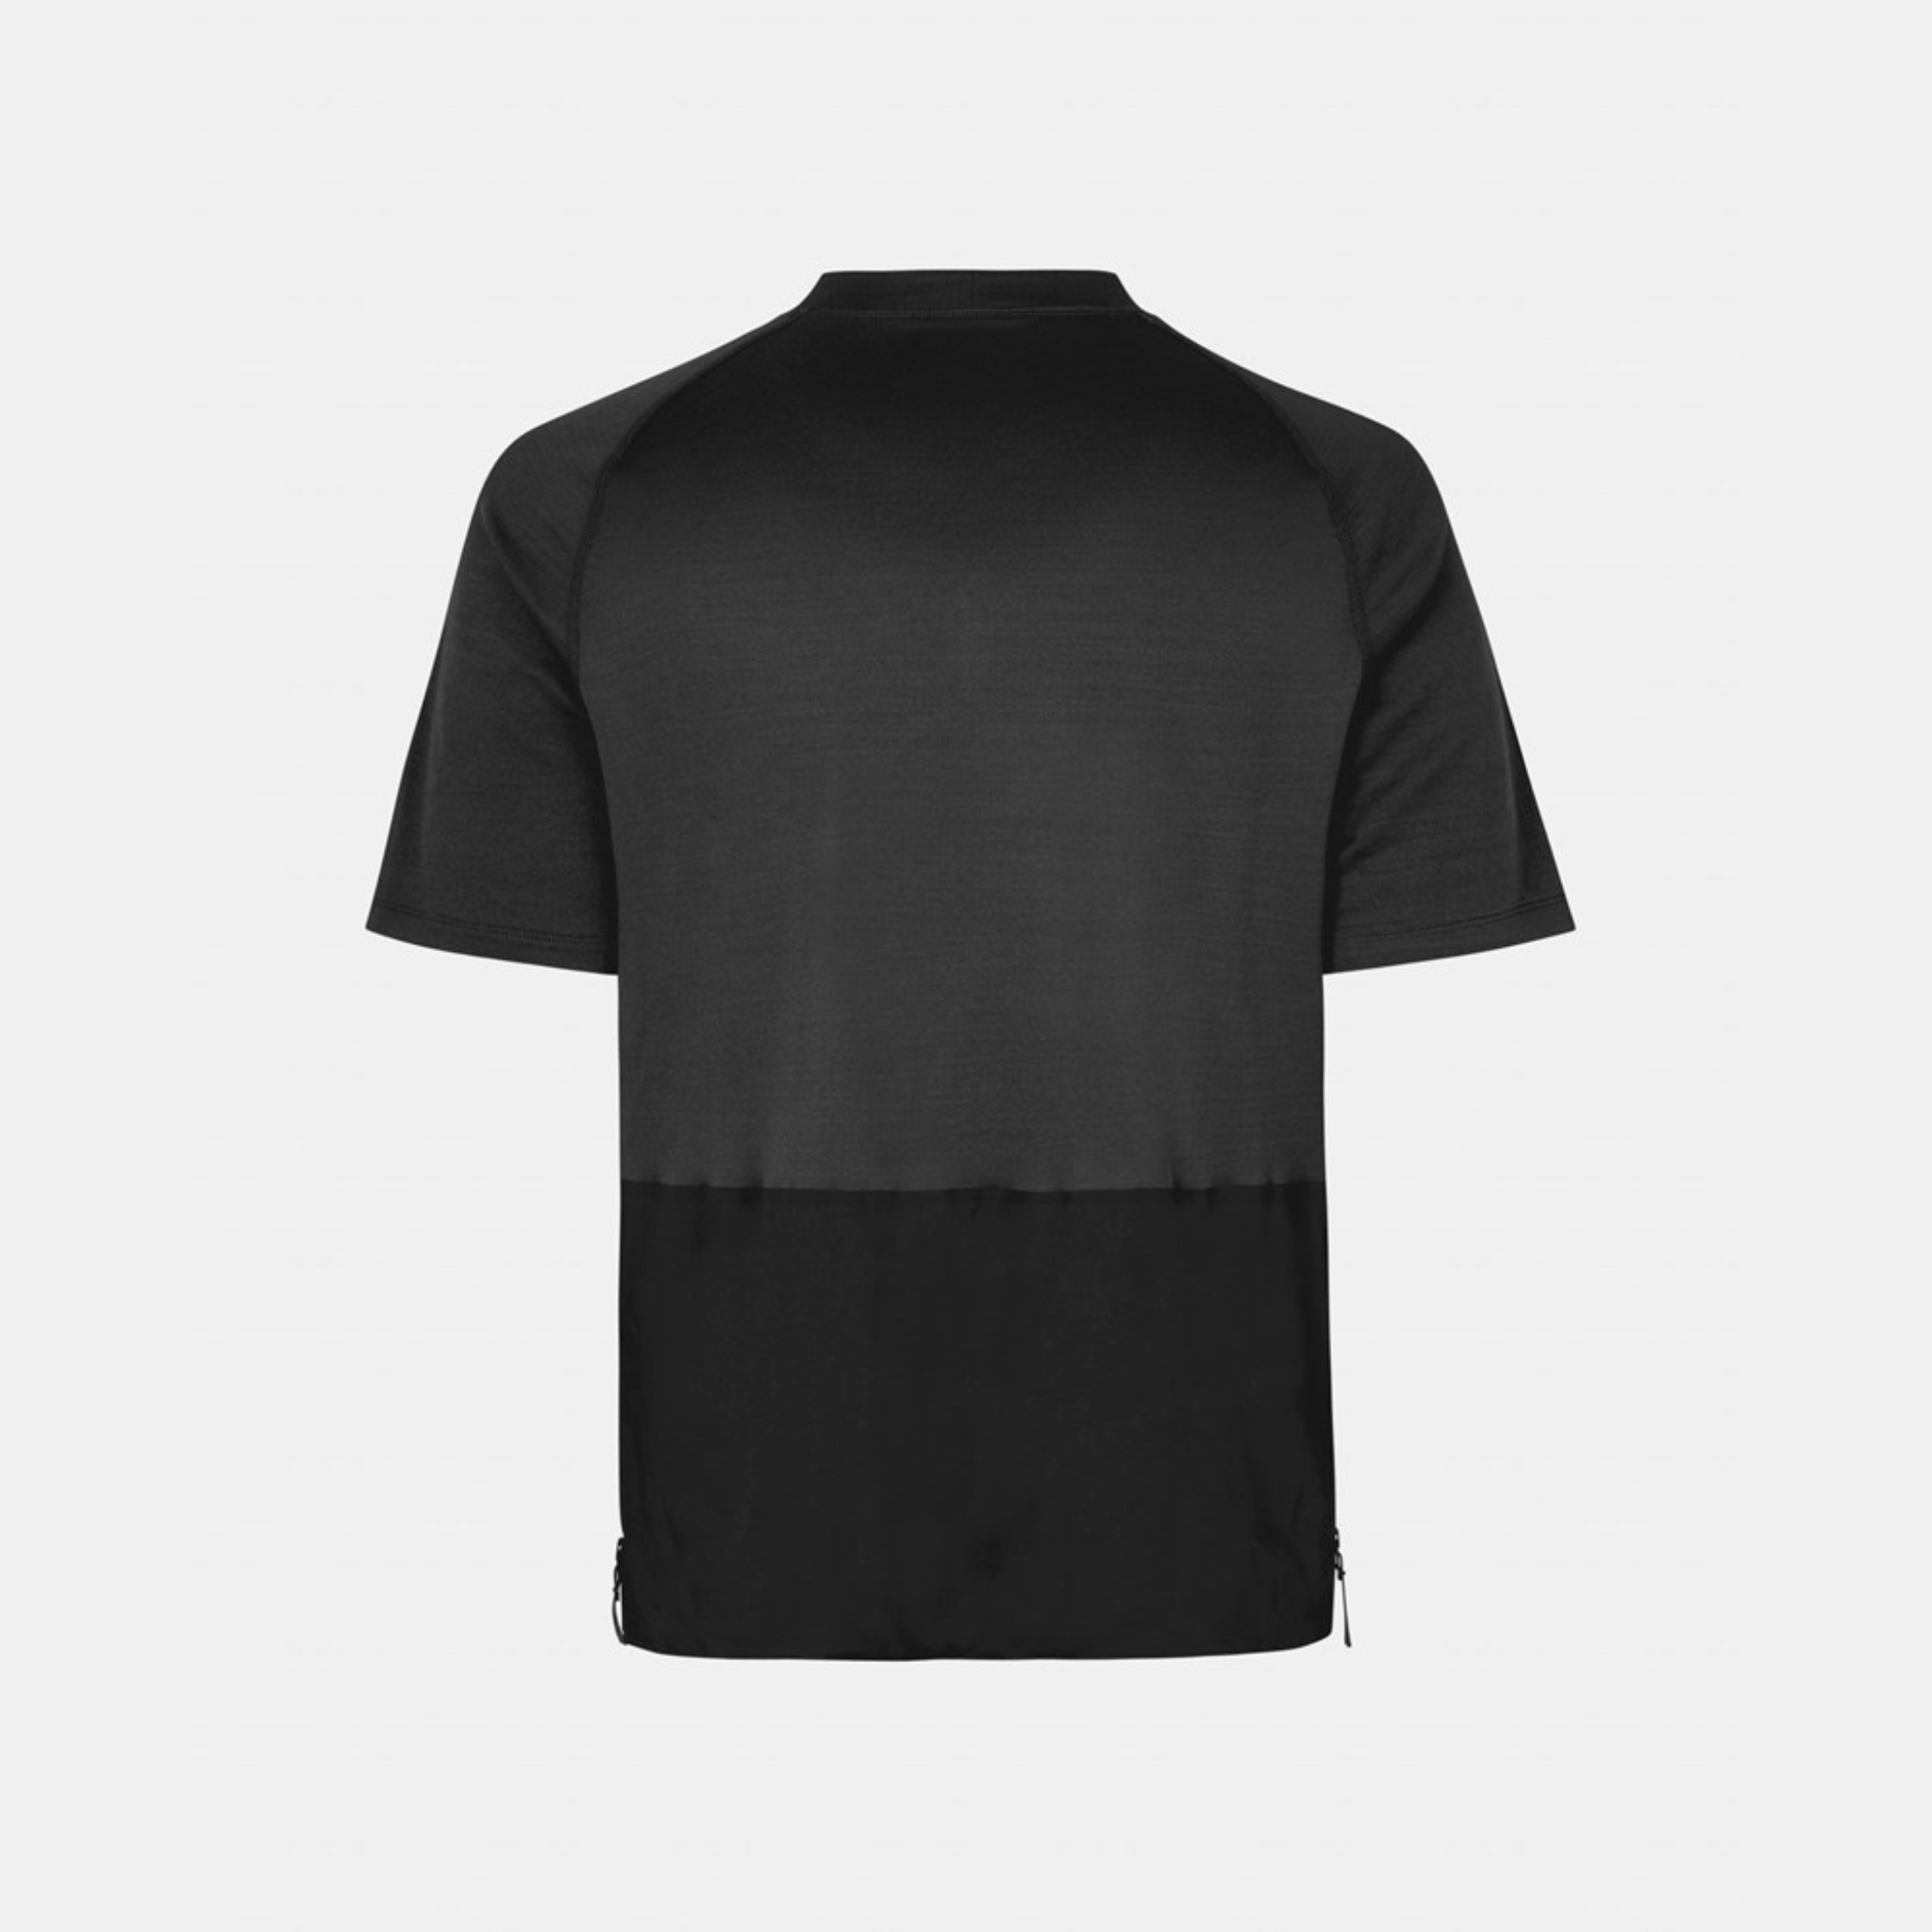 Escapism Technical SS T-Shirt - Black